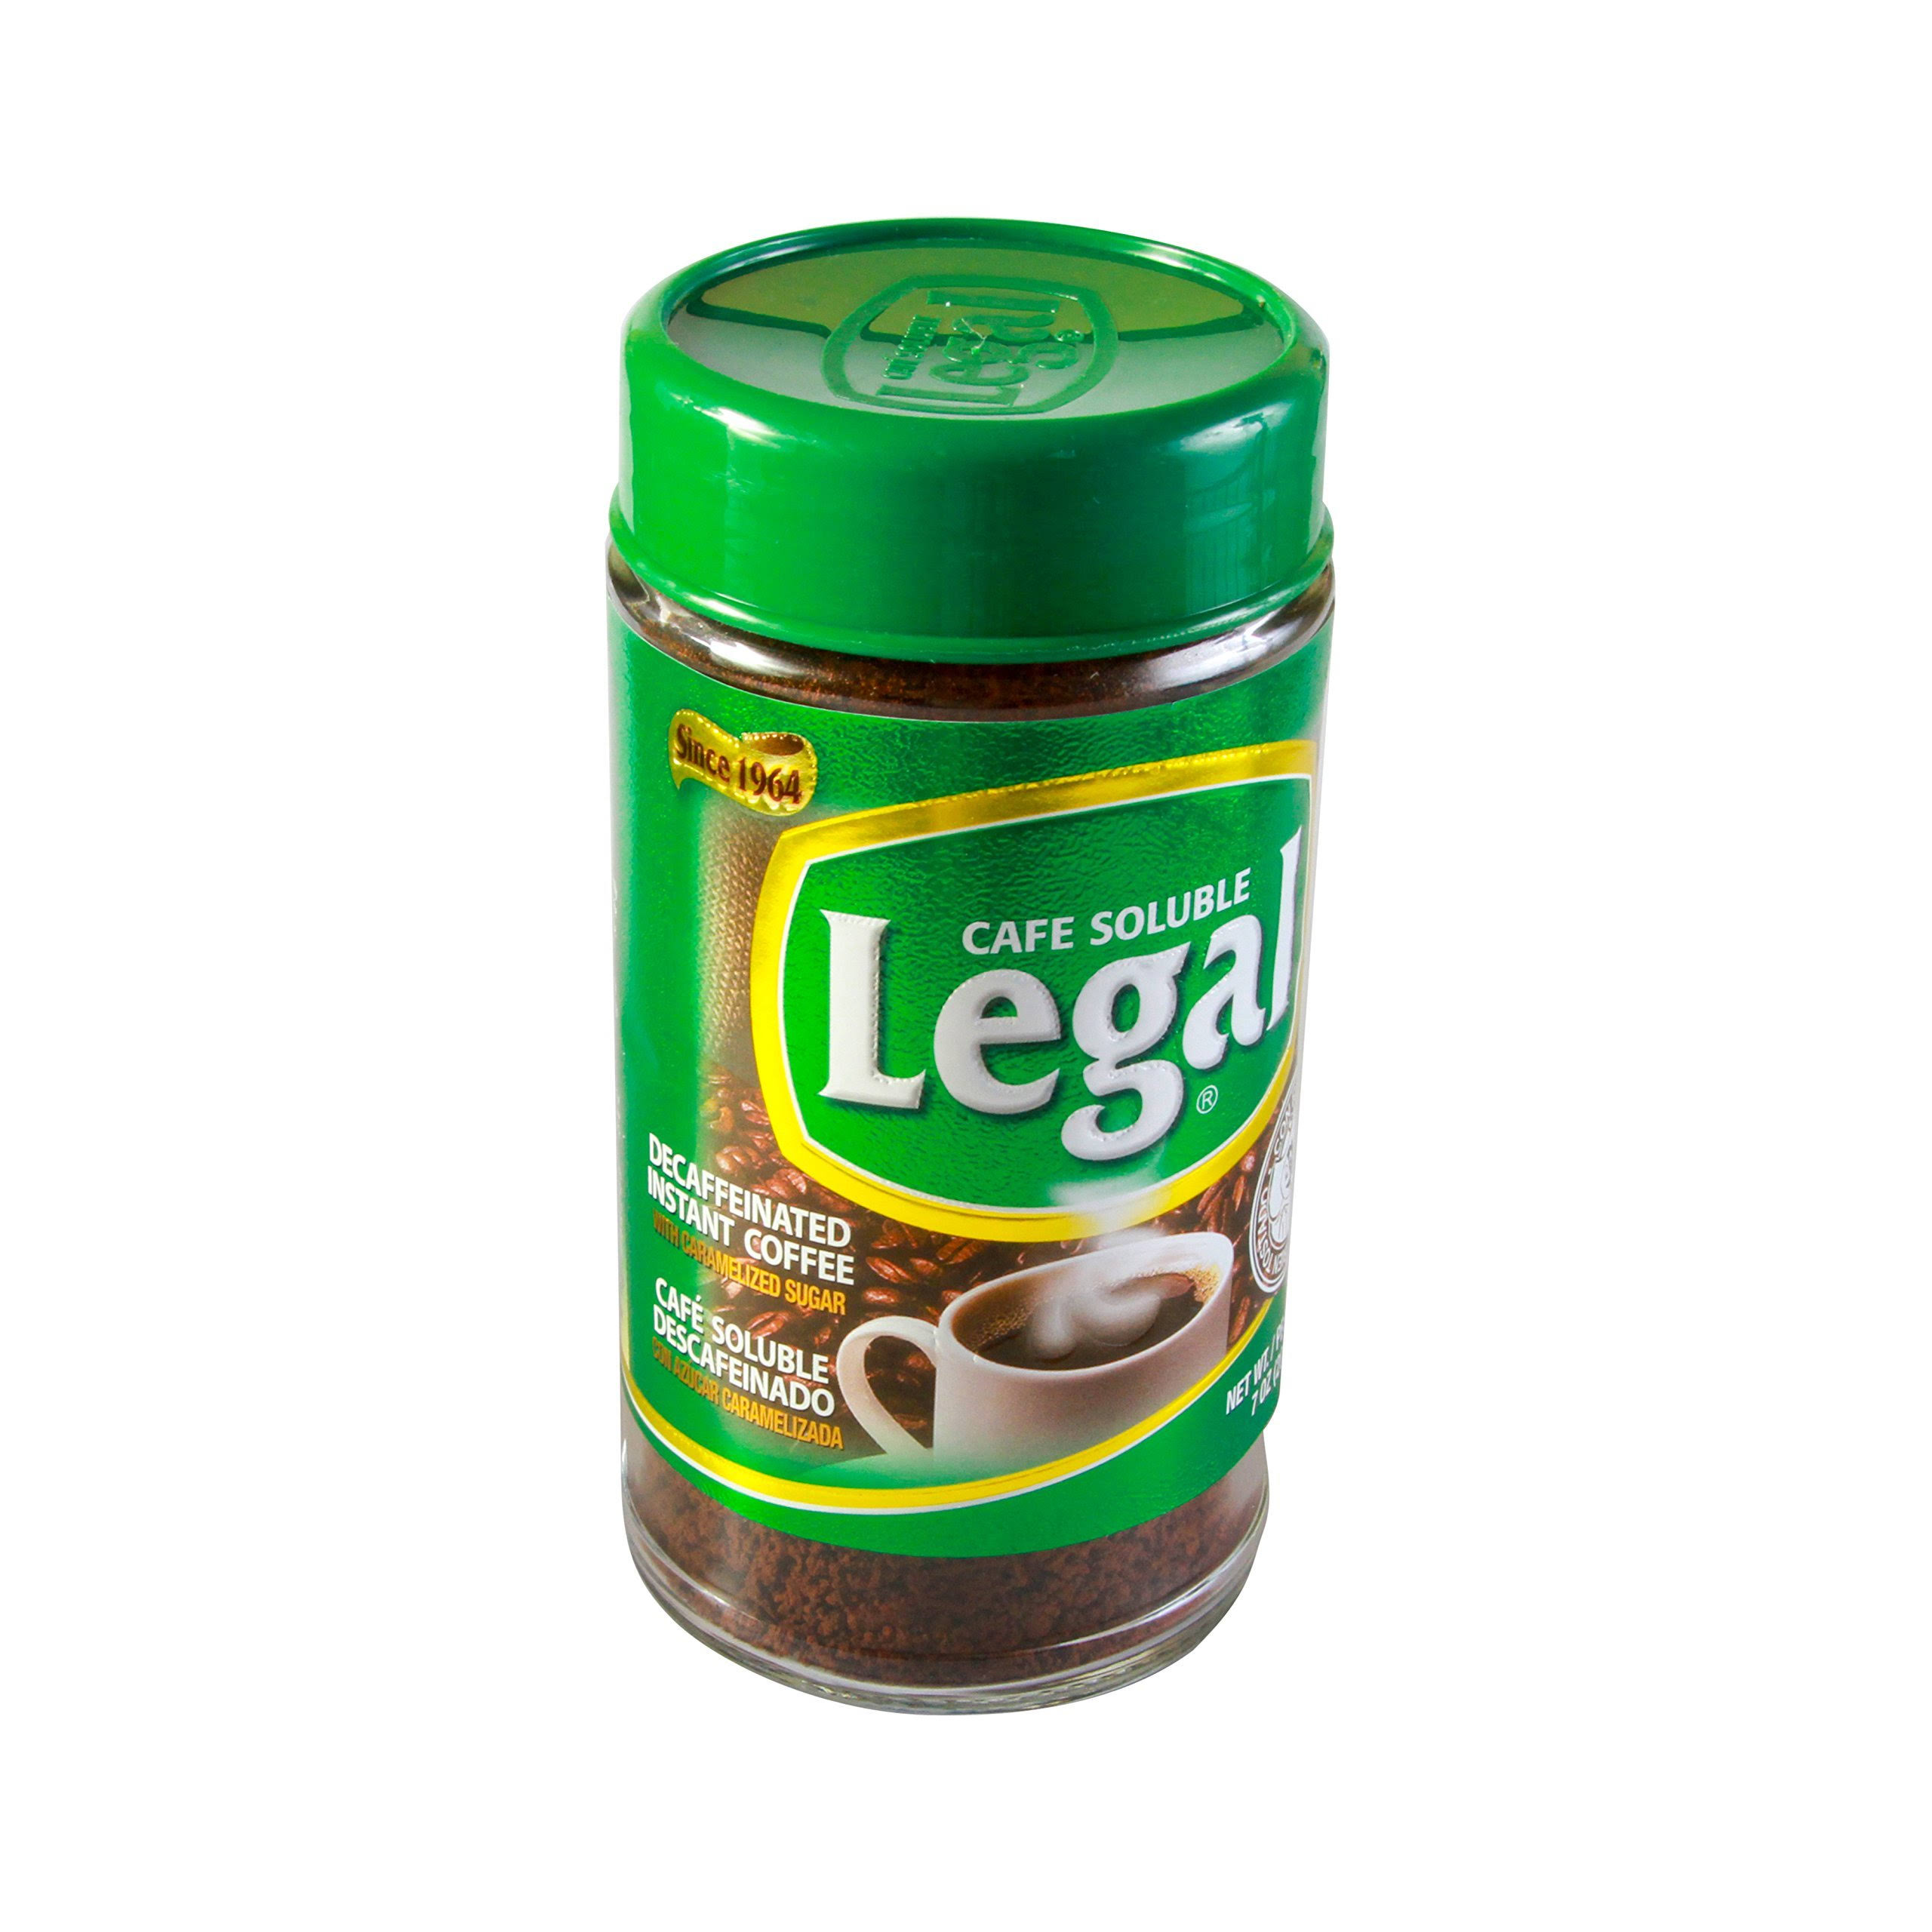 Cafe Legal Instant Coffee, Decaffeinated - 7 oz jar